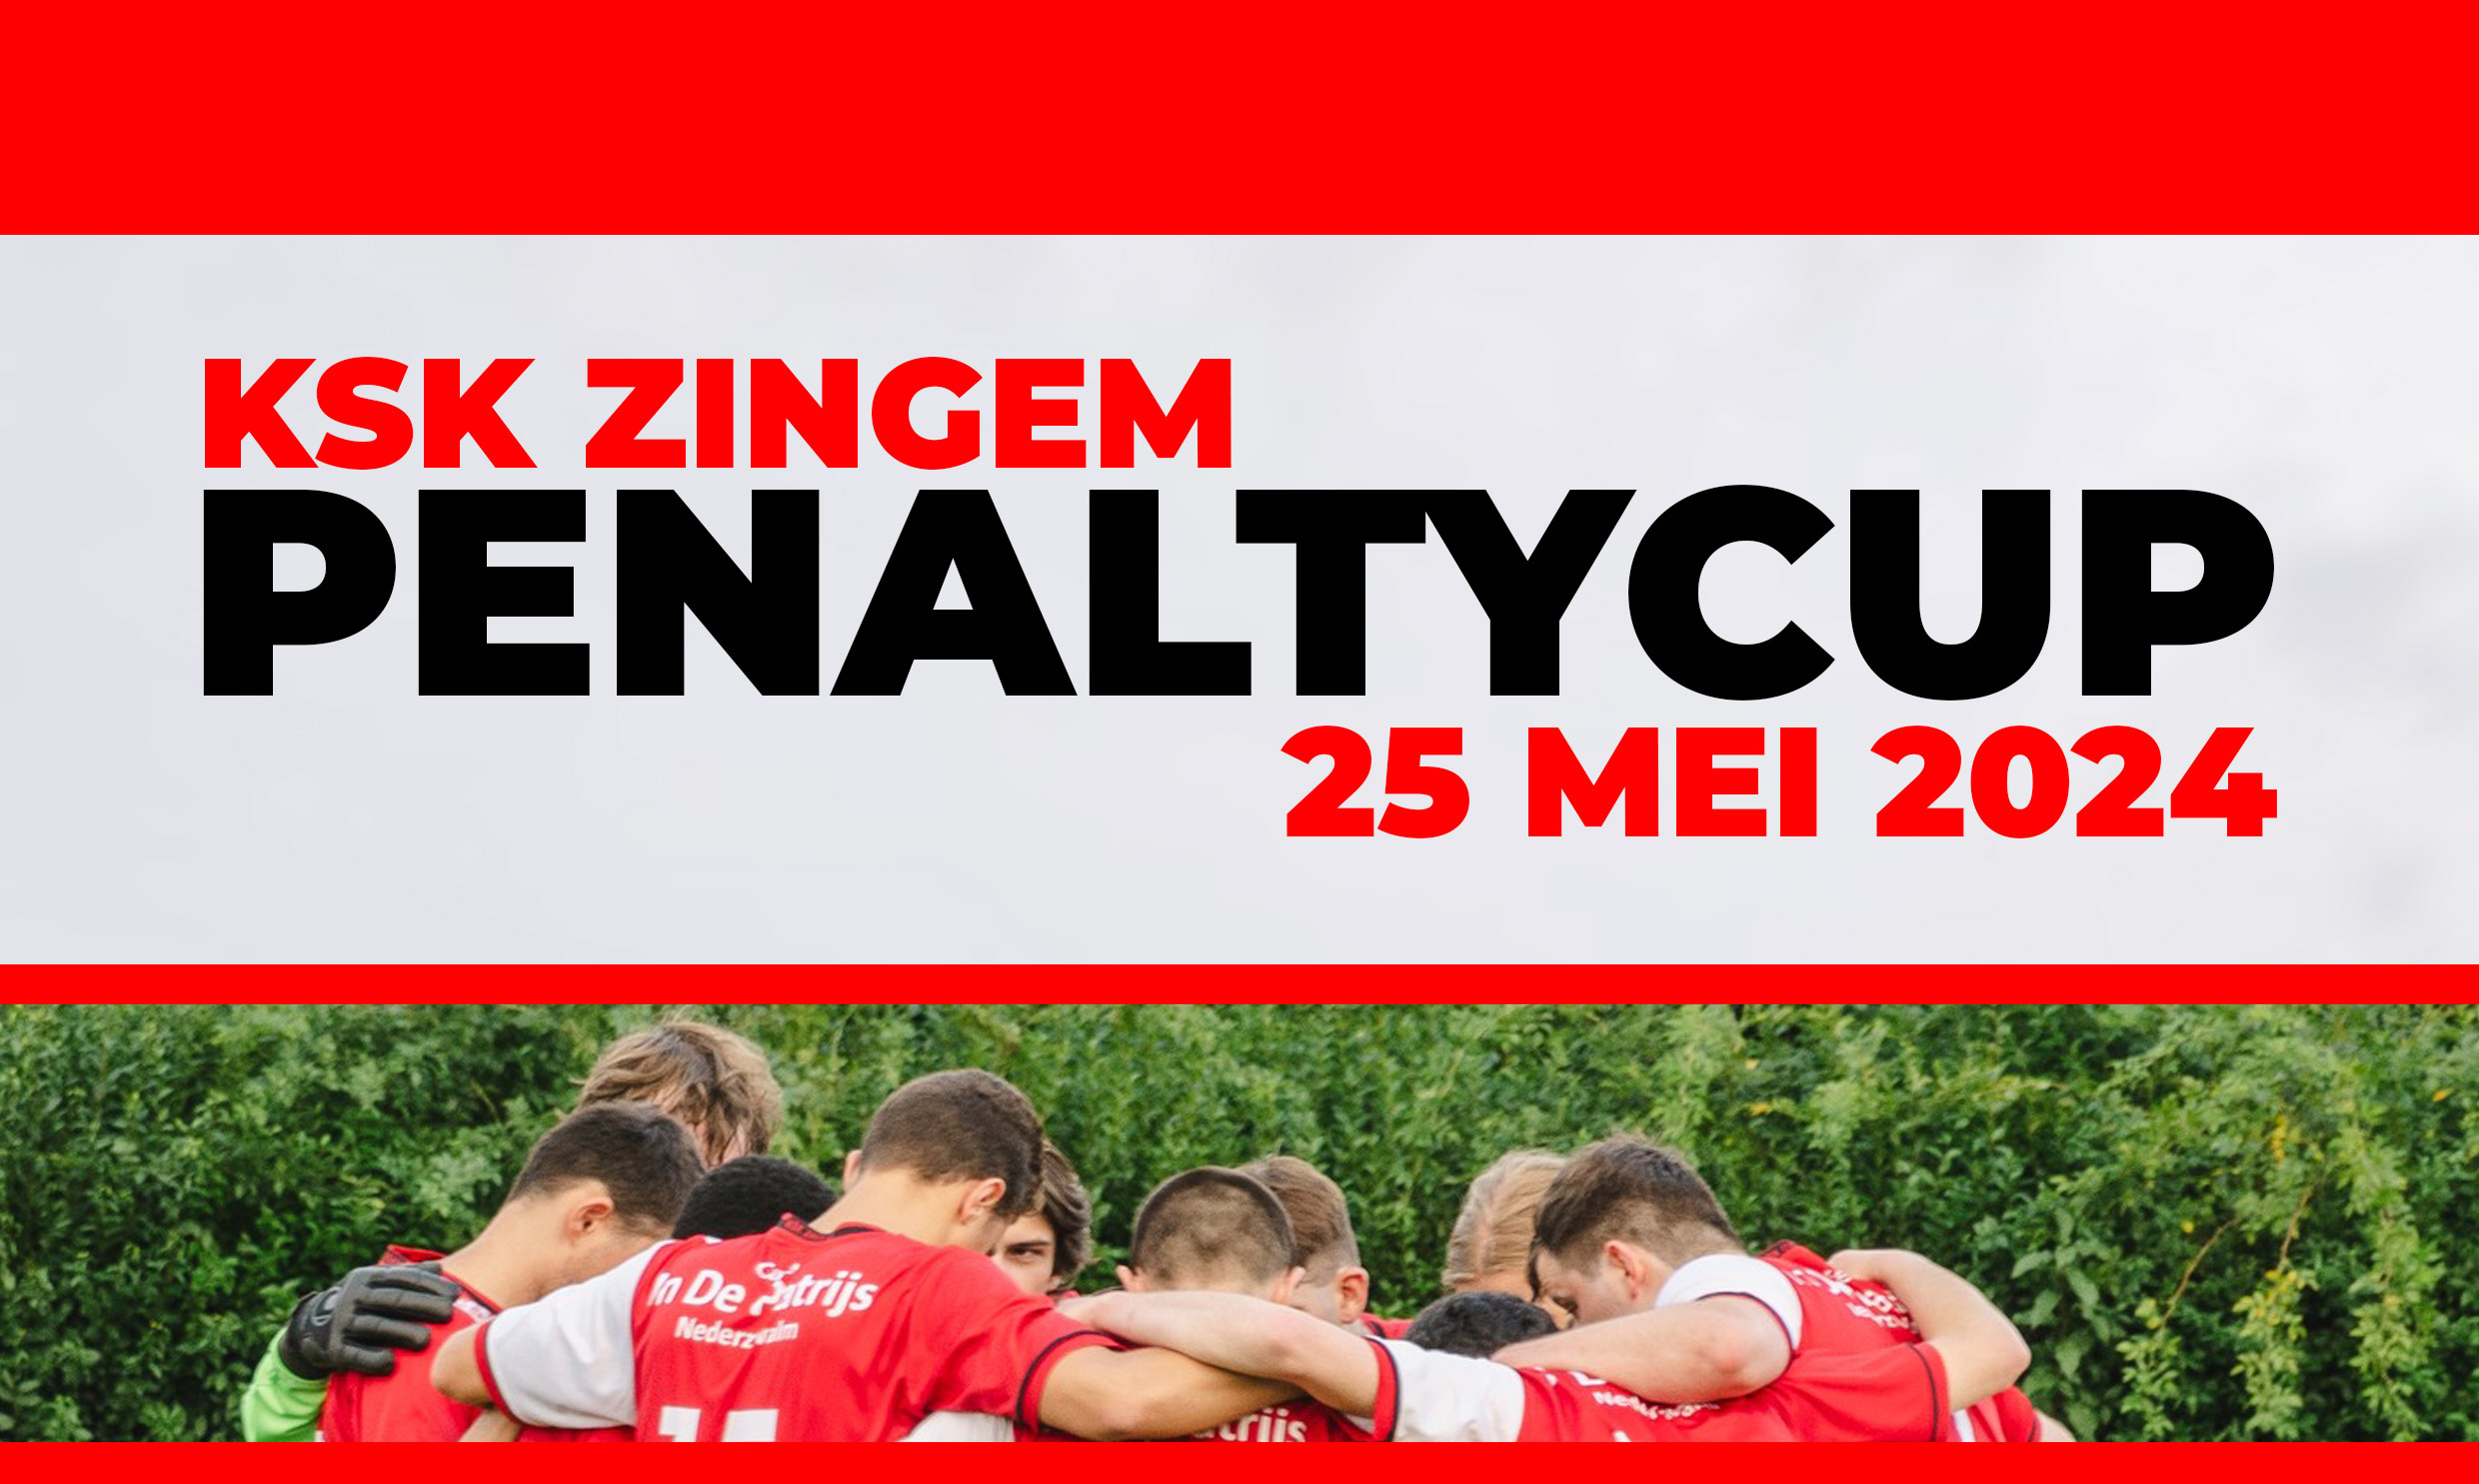 KSK Zingem penaltycup 2024